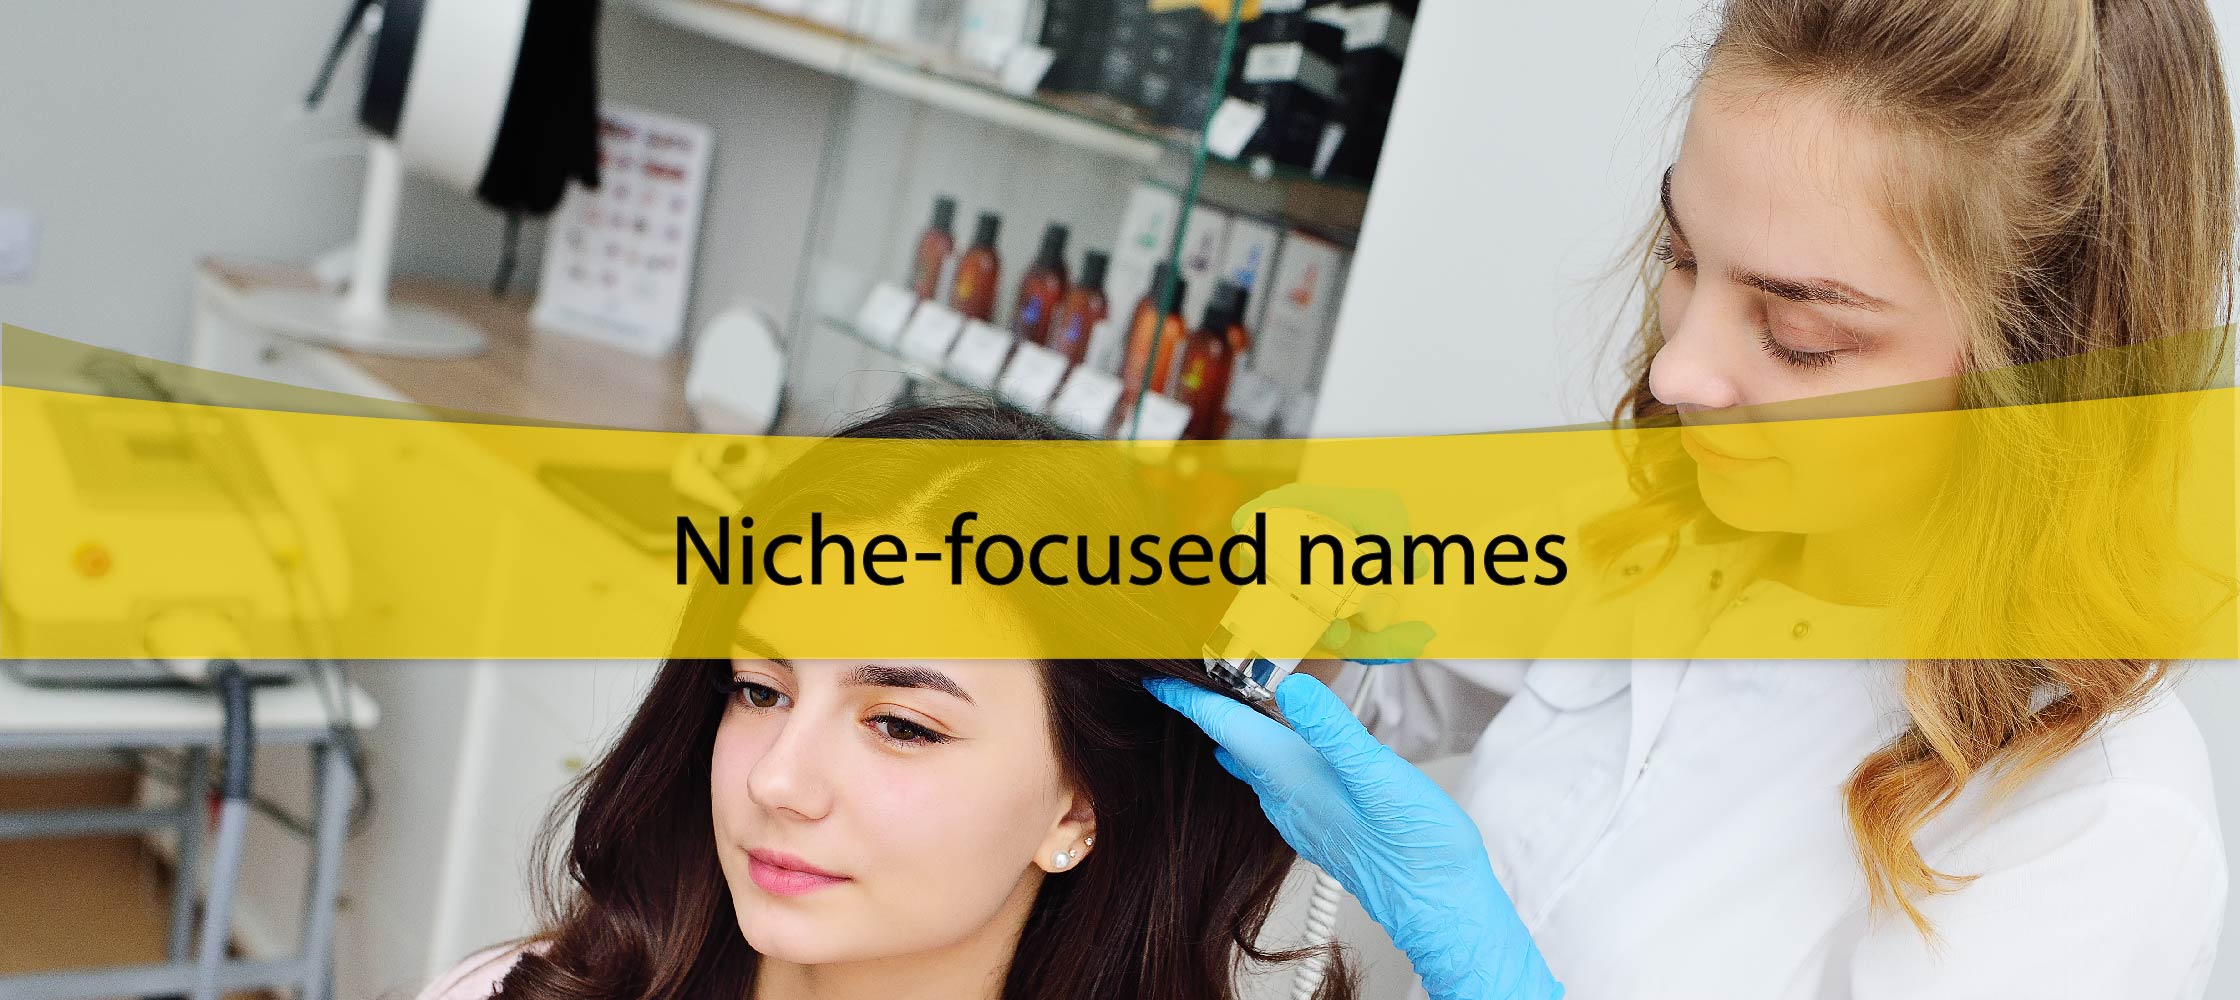 Niche-focused names